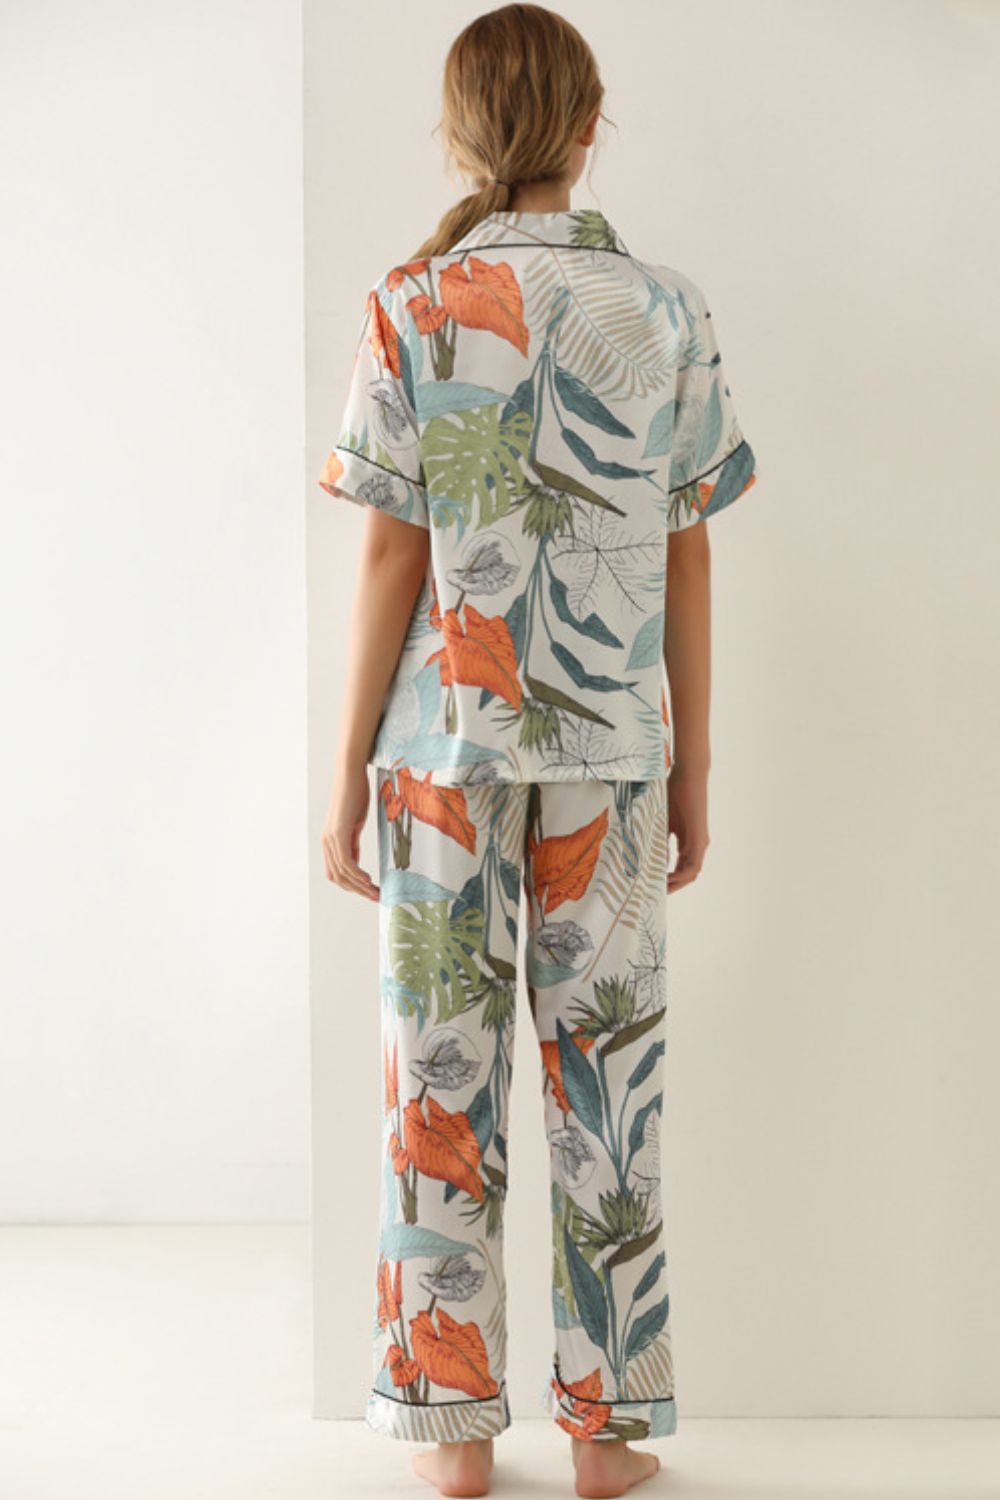 Botanical Print Button-Up Top and Pants Pajama Set DromedarShop.com Online Boutique